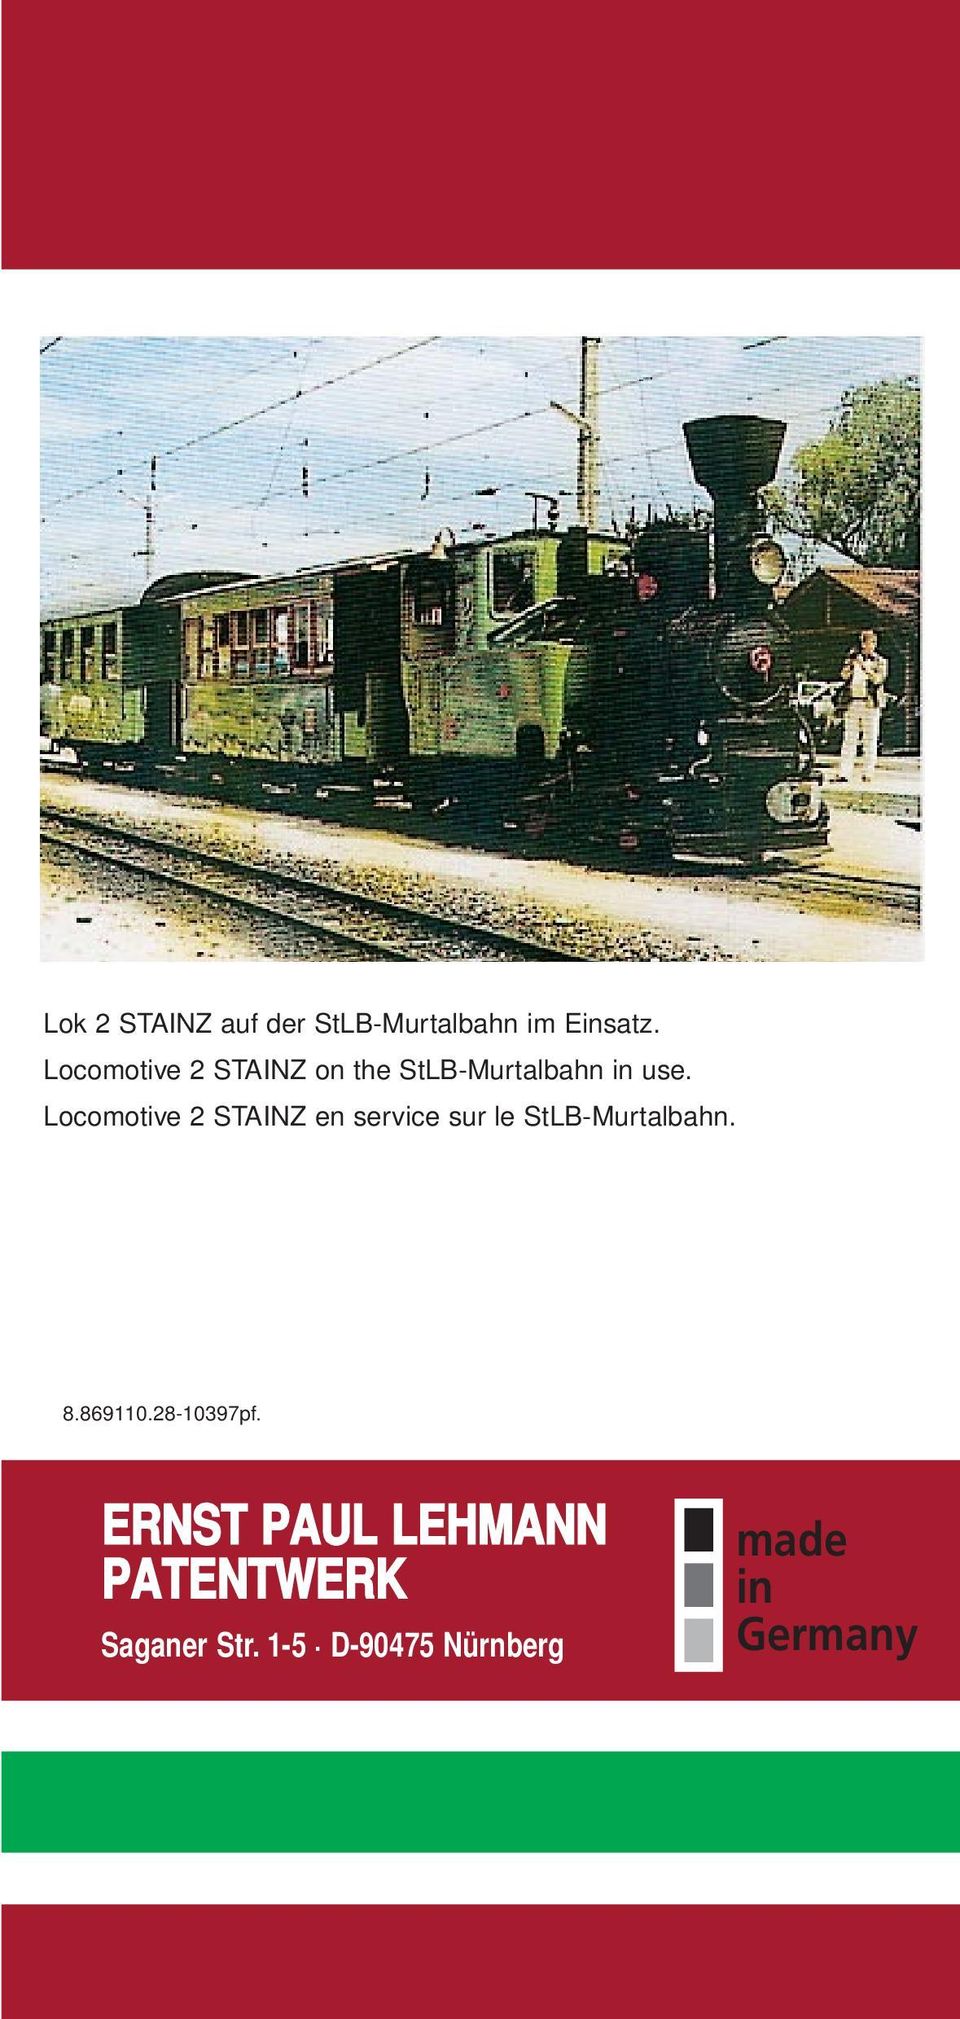 Locomotive 2 STAINZ en service sur le StLB-Murtalbahn. 8.869110.